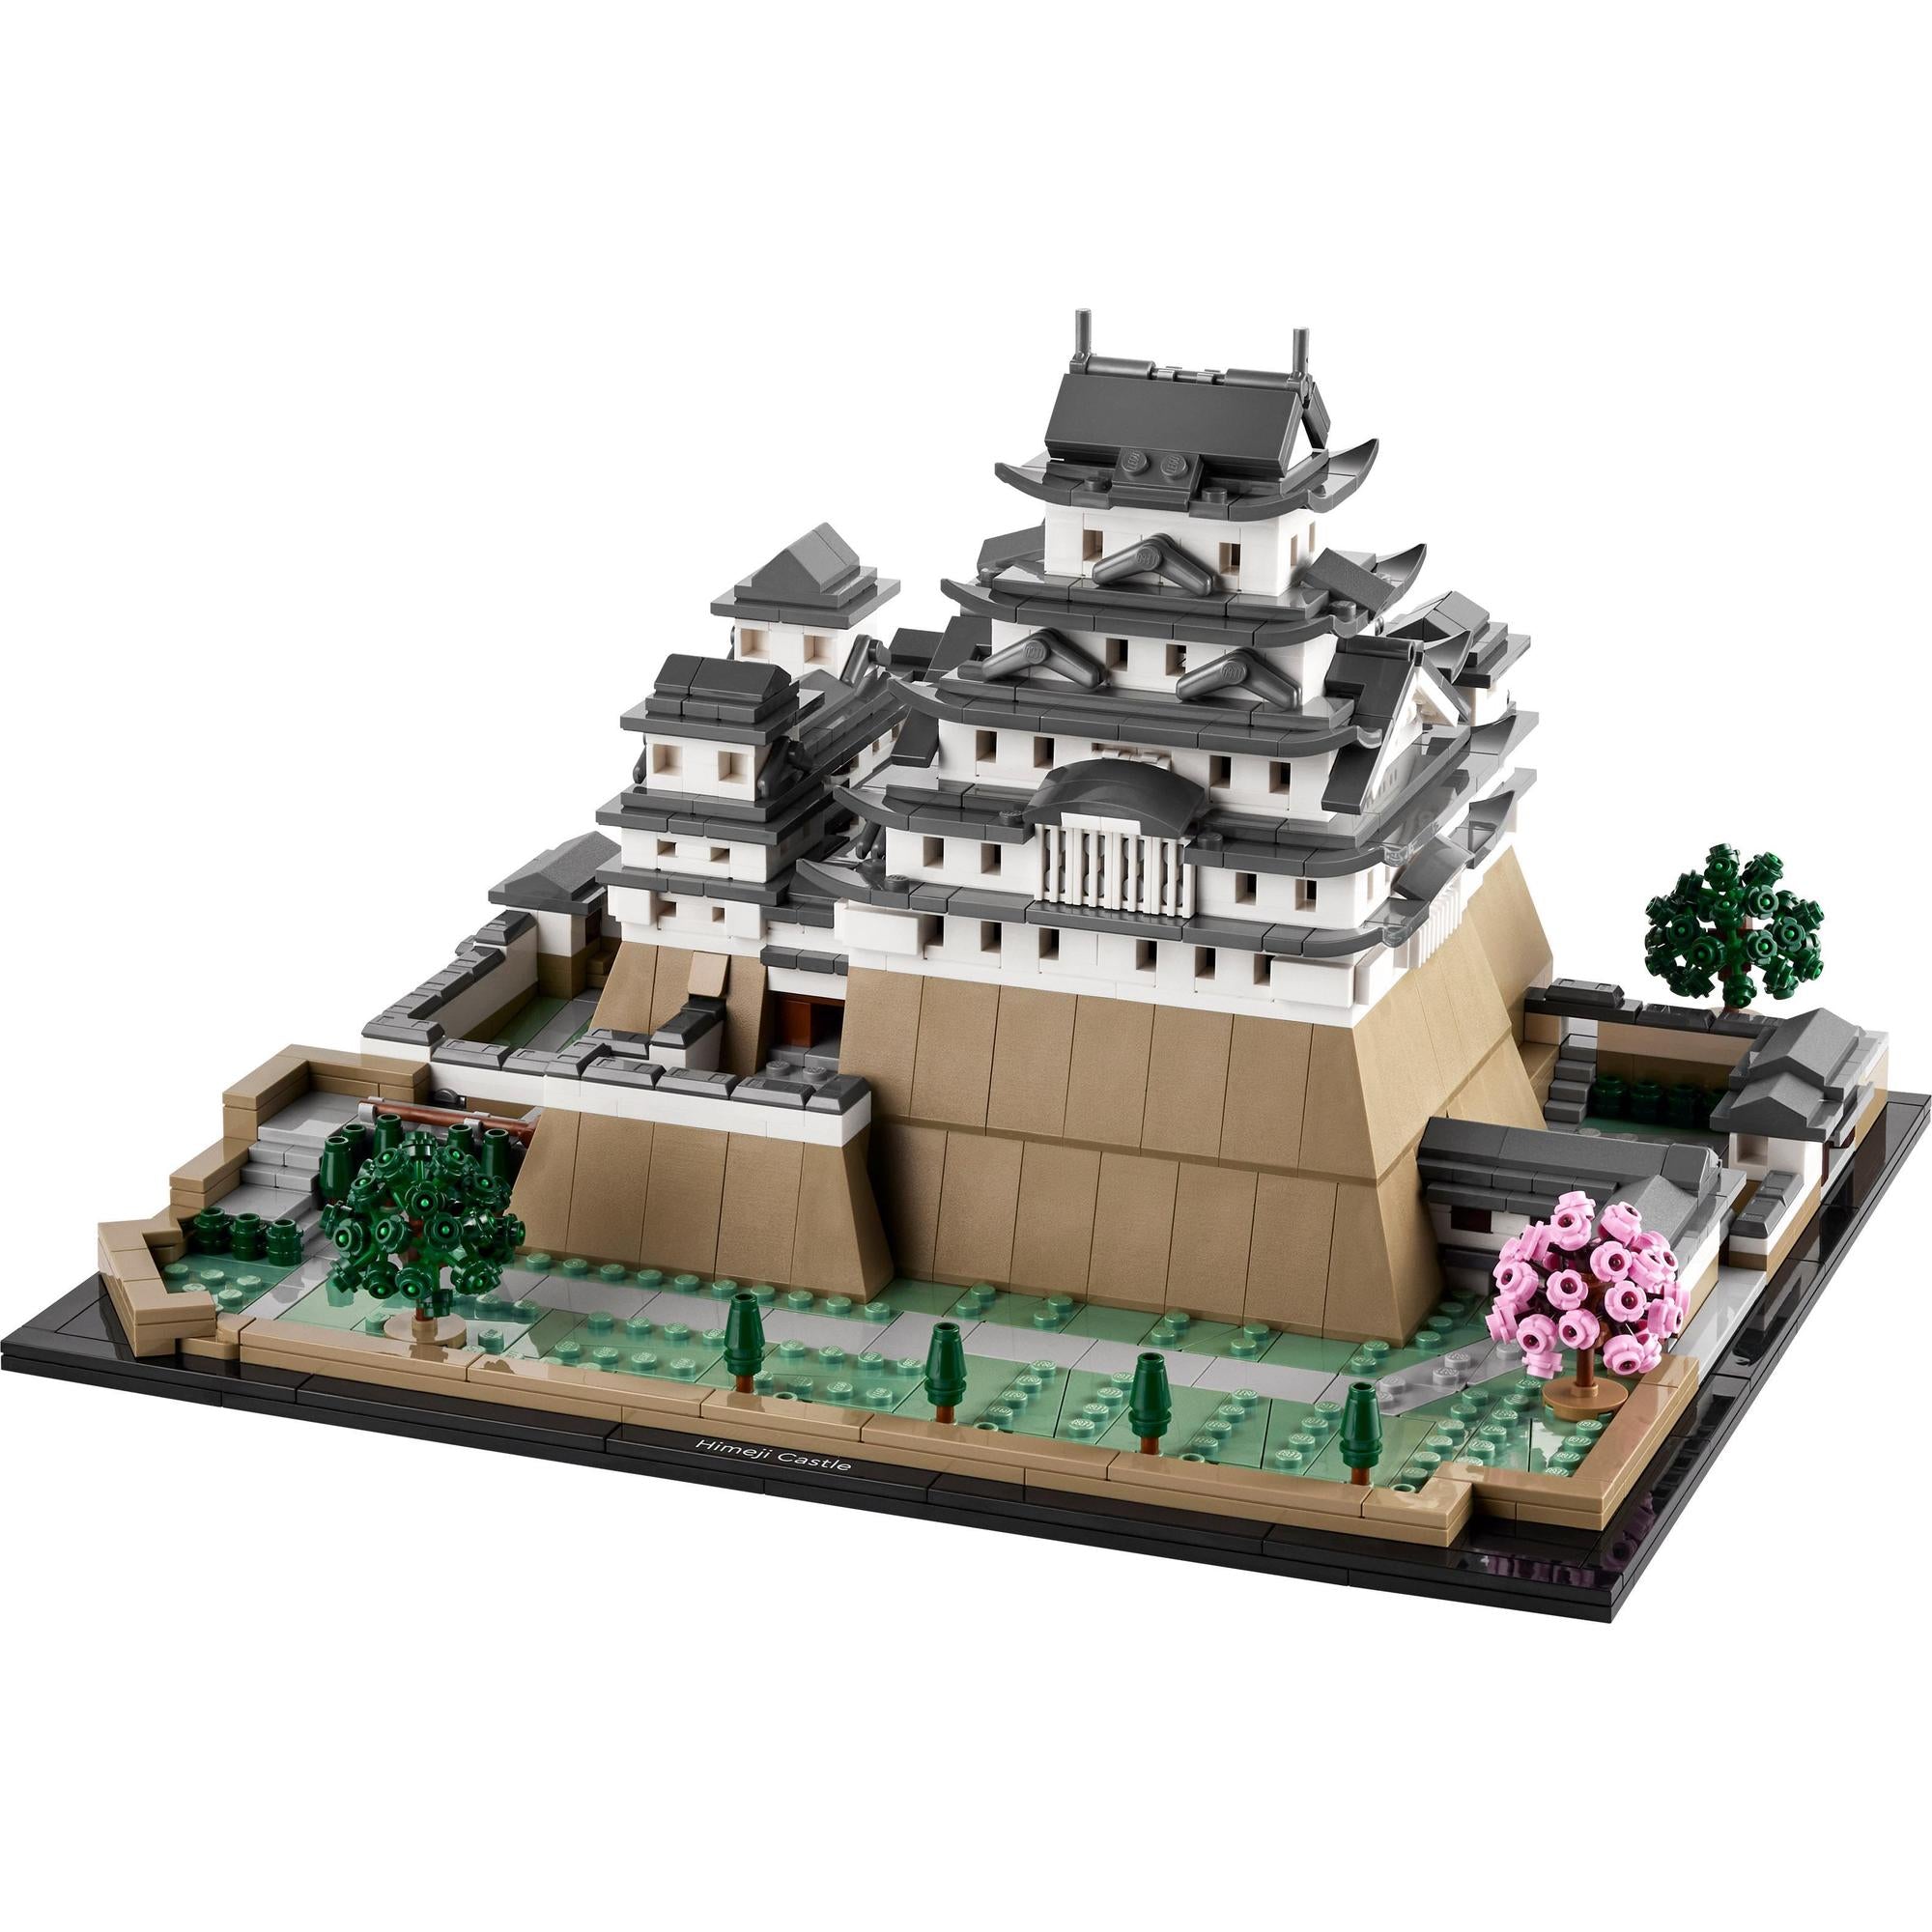 LEGO® | 21060 | Burg Himeji